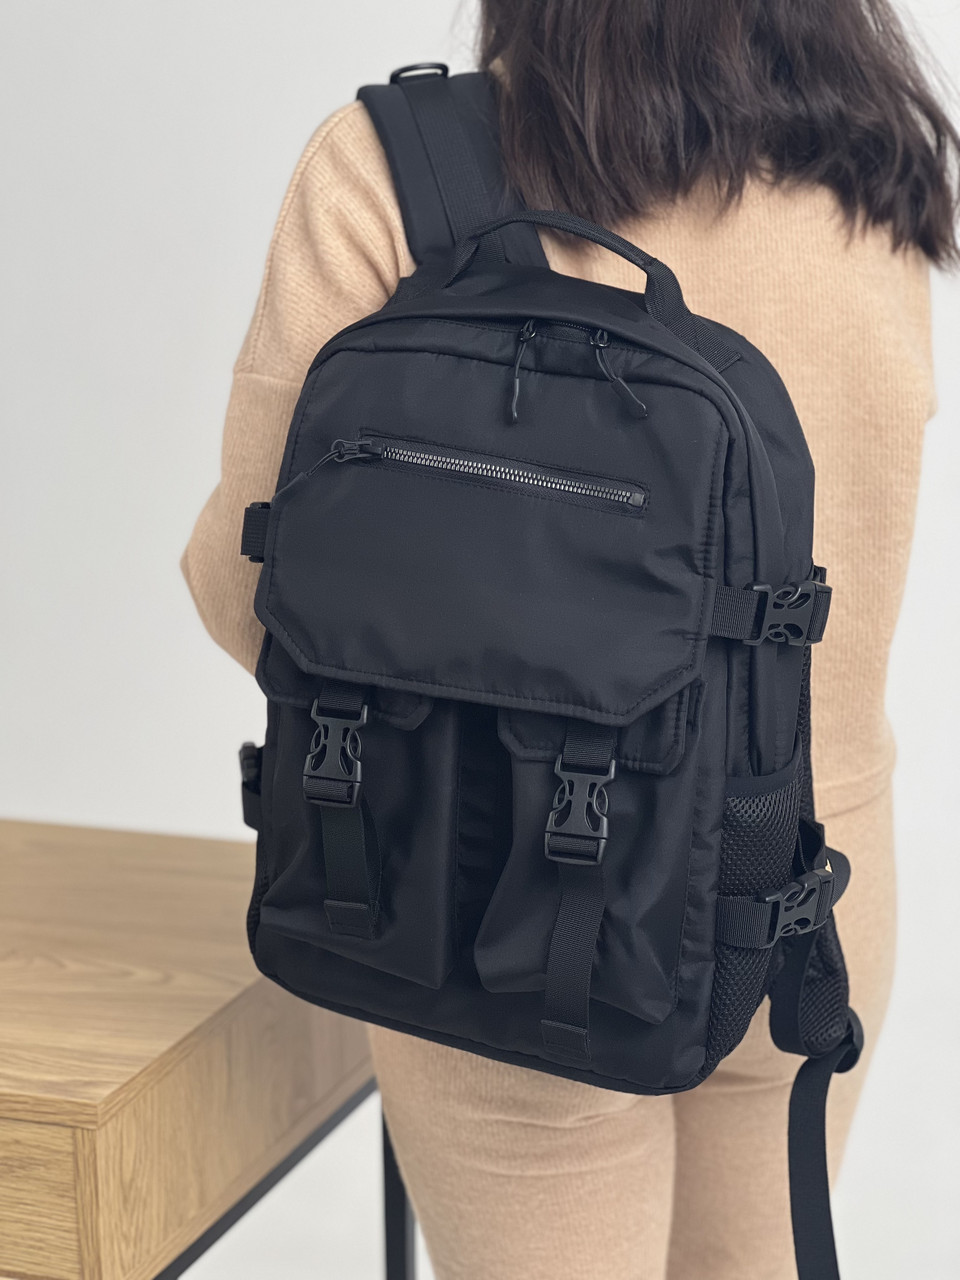 Повсякденний рюкзак OnePro, класичний стиль модель 2023 Woman Black